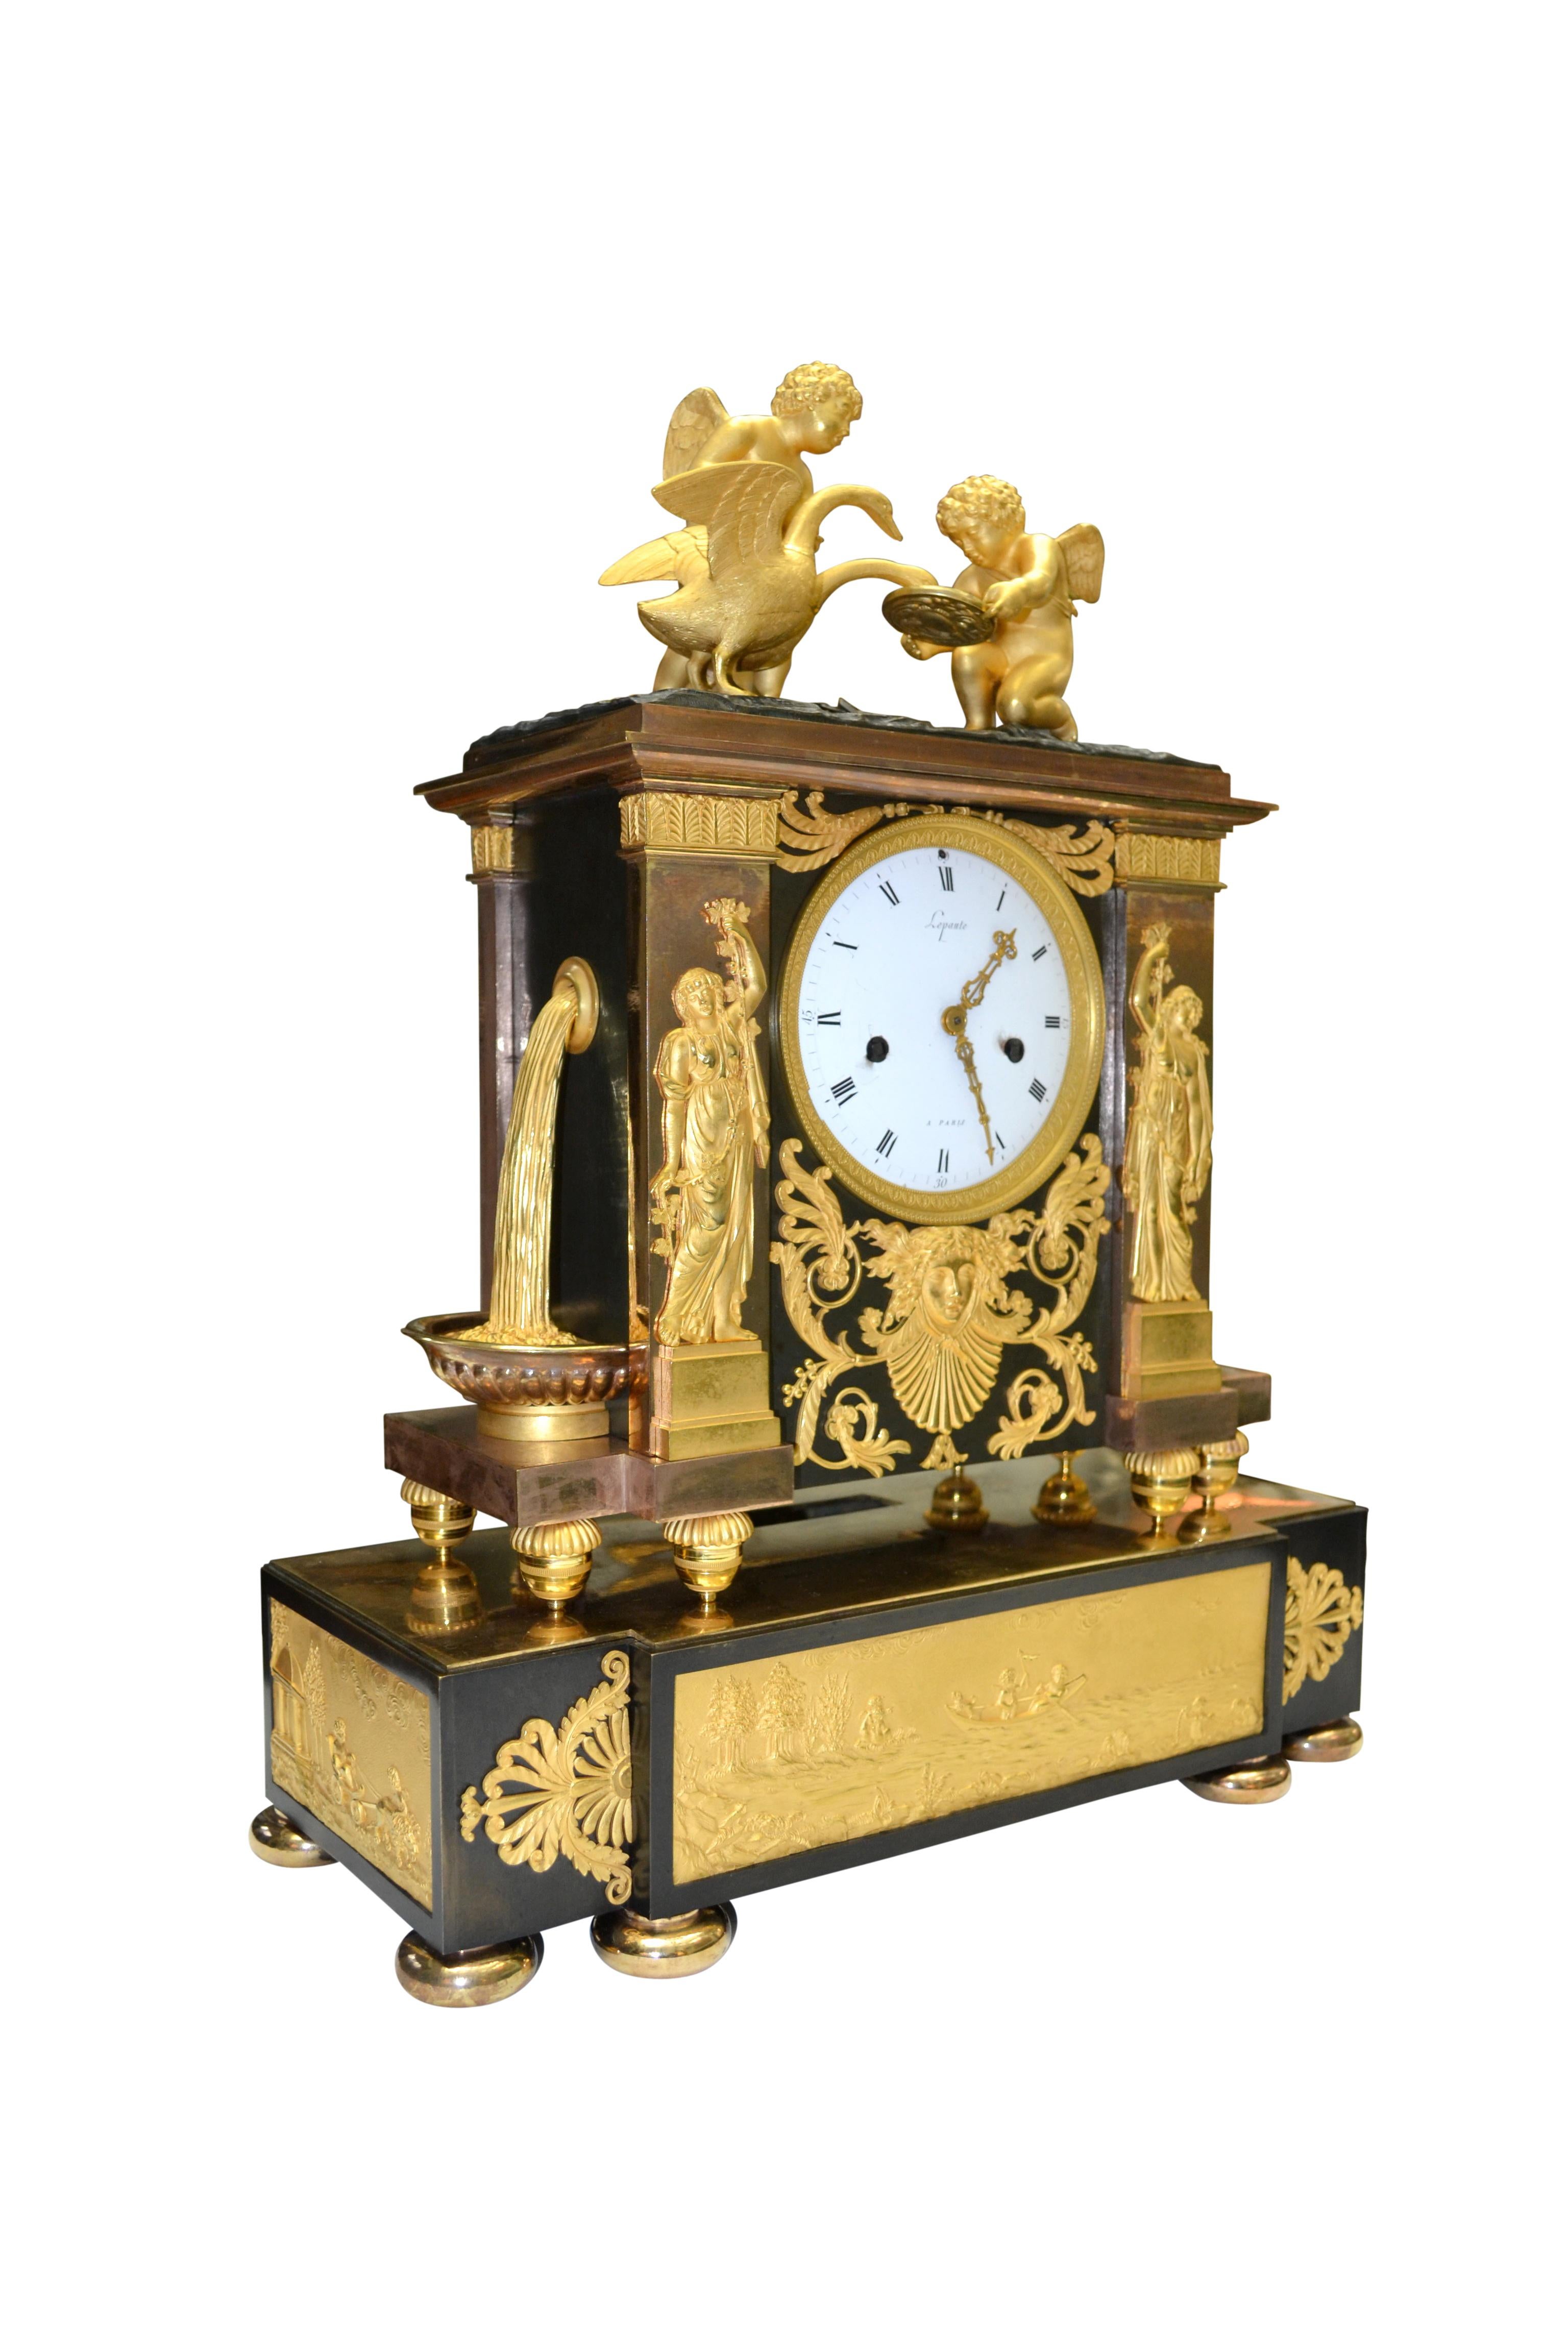 lepaute clock for sale